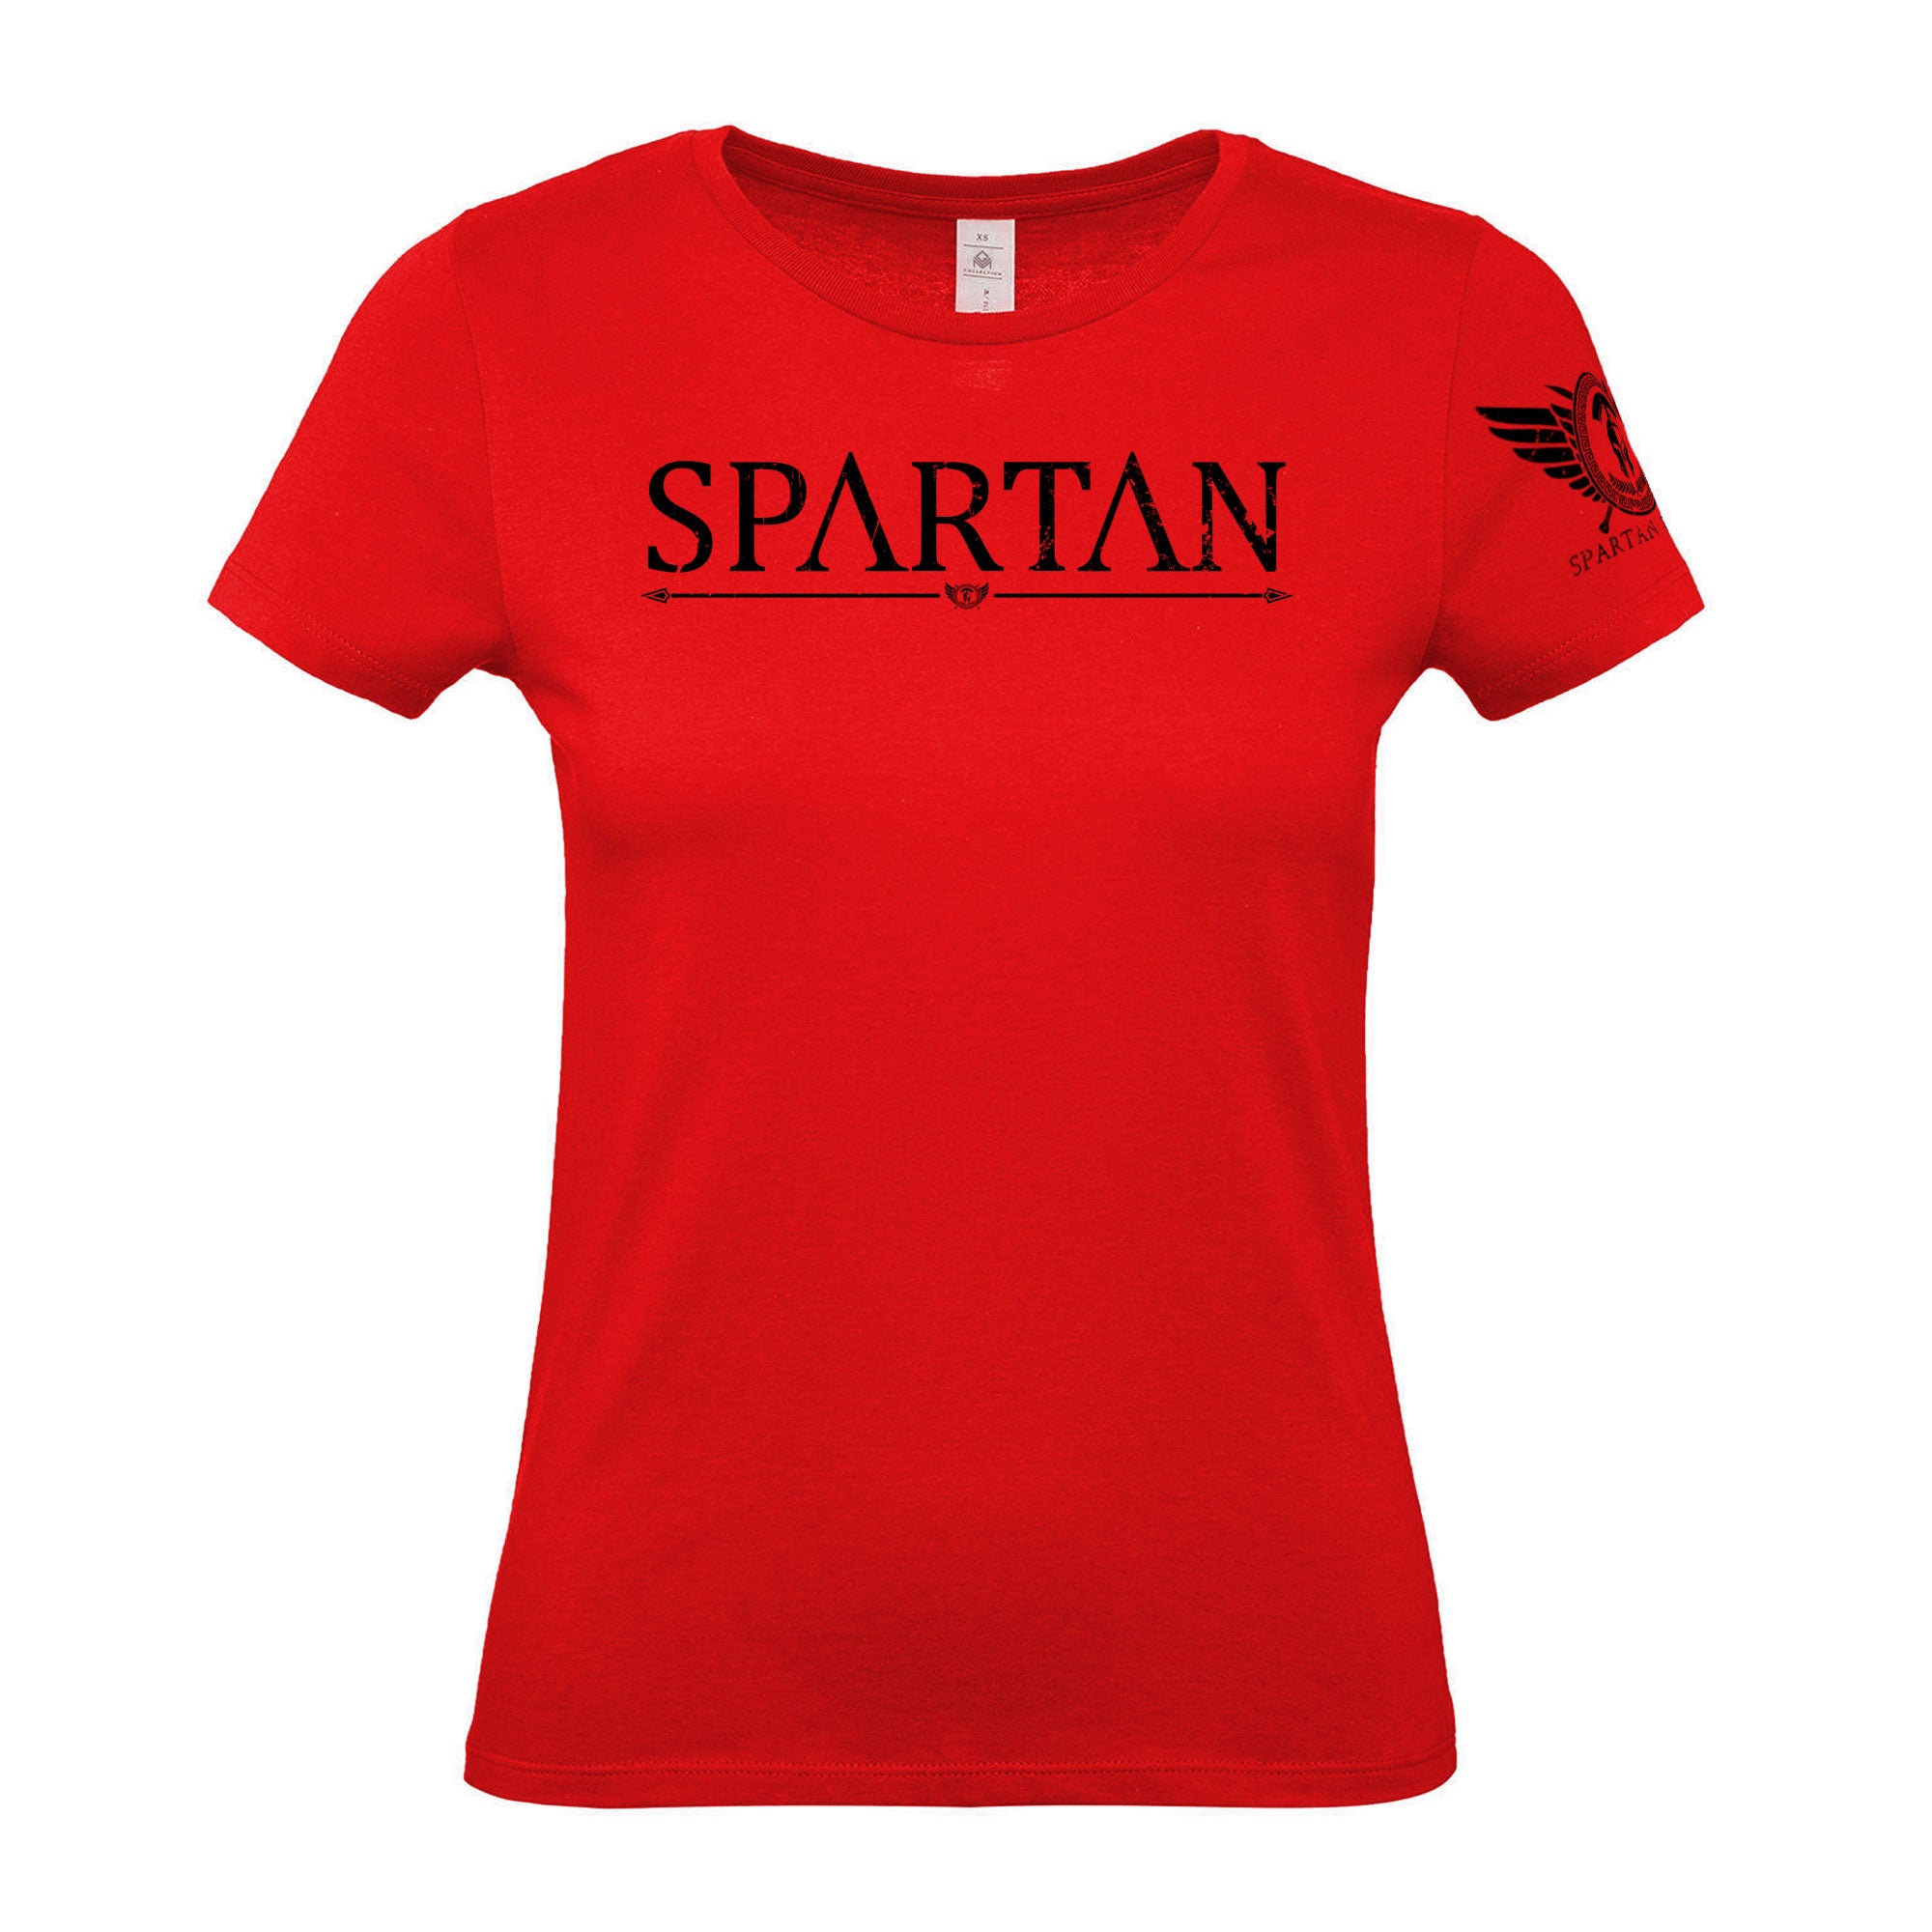 Spartan Forged Spartan - Women's Gym T-Shirt